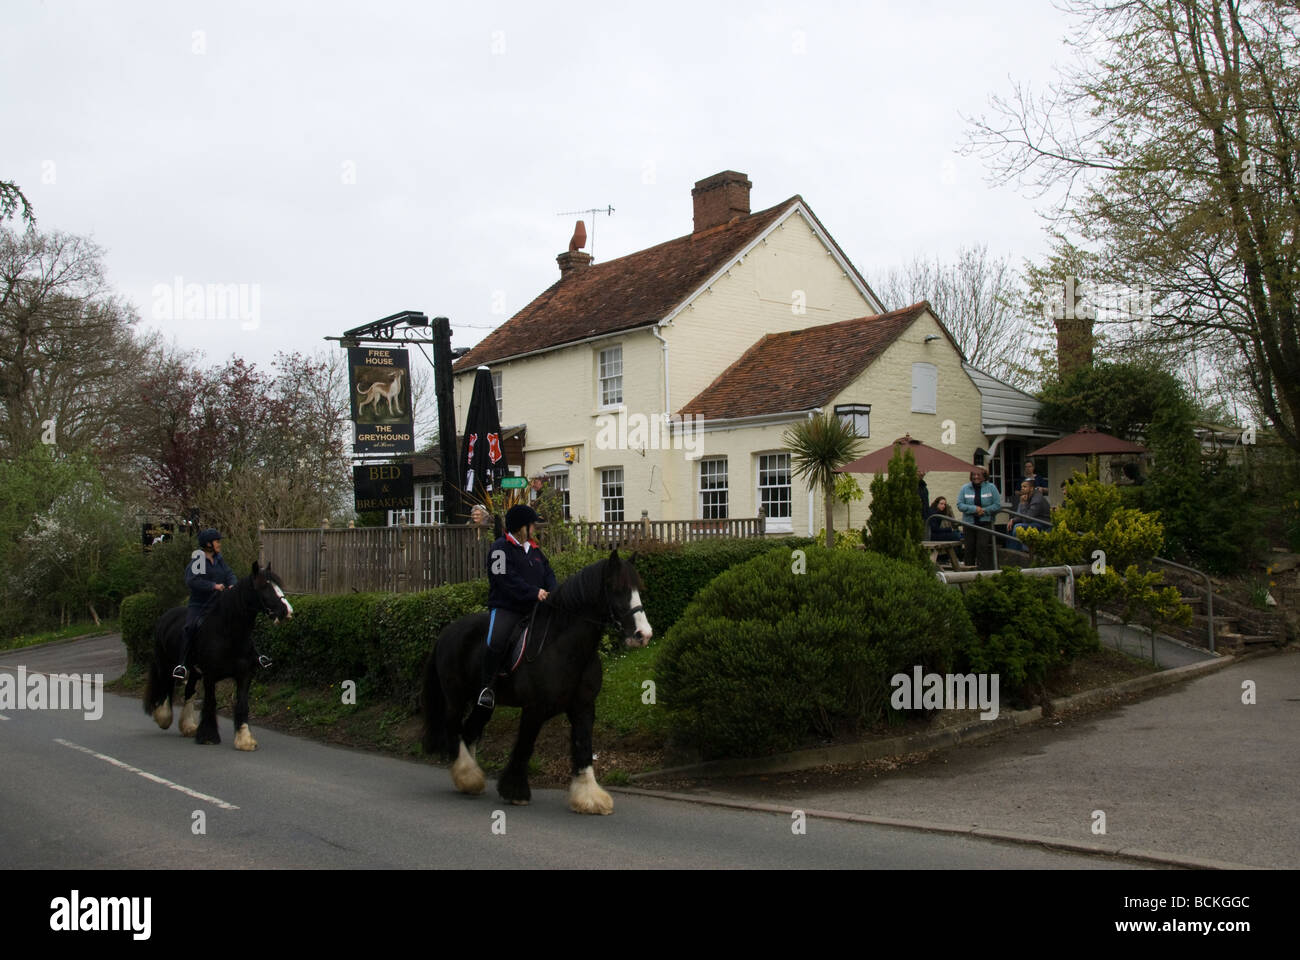 People on horses passing county pub, The Greyhound, Hever Castle village, Kent, England, UK Stock Photo